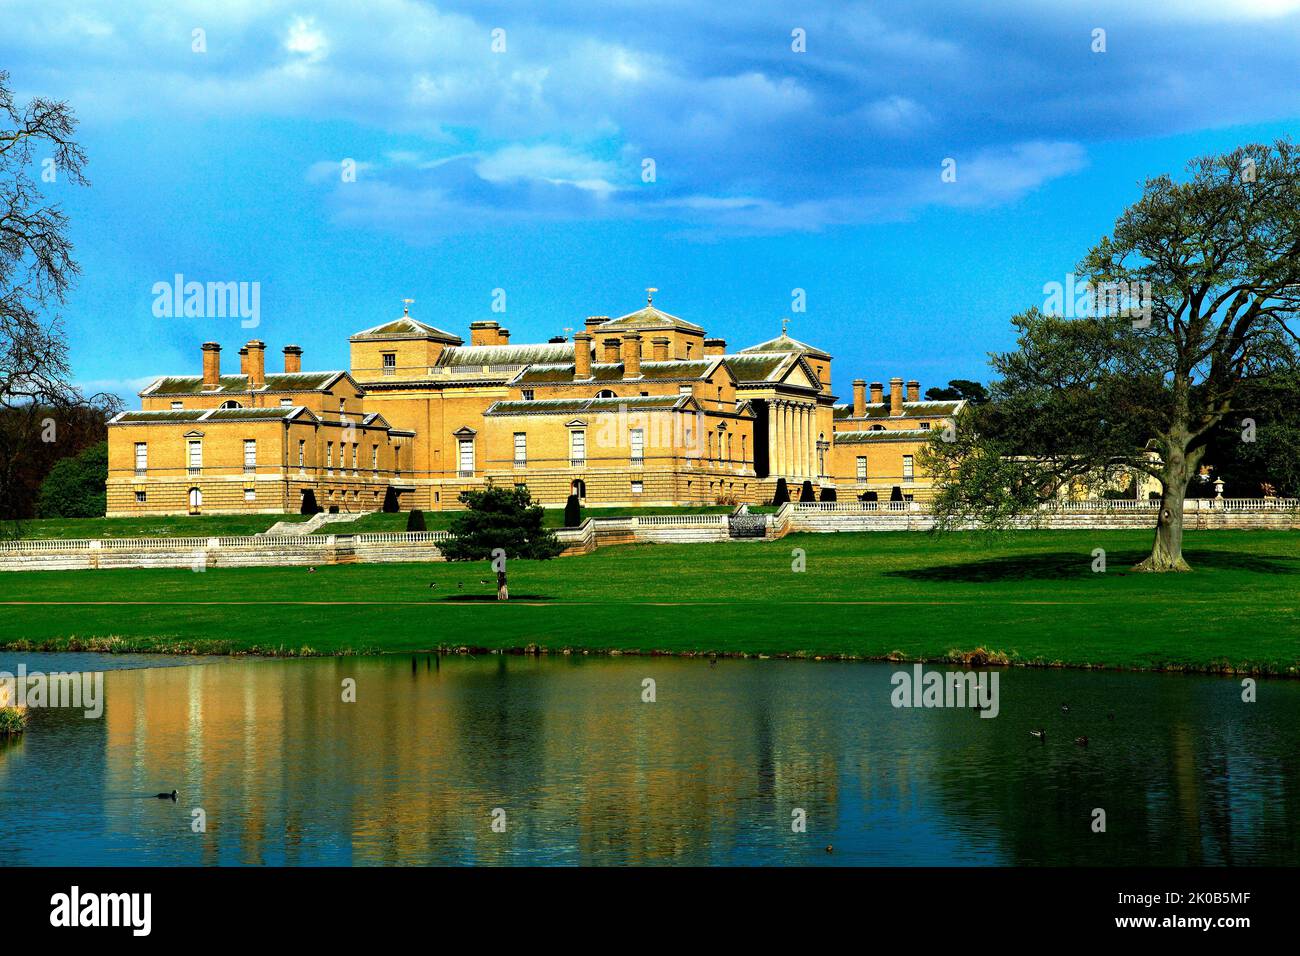 Holkham Hall, Norfolk, vista sul lago, residenza signorile inglese, palazzo palladiano, Inghilterra, Regno Unito Foto Stock